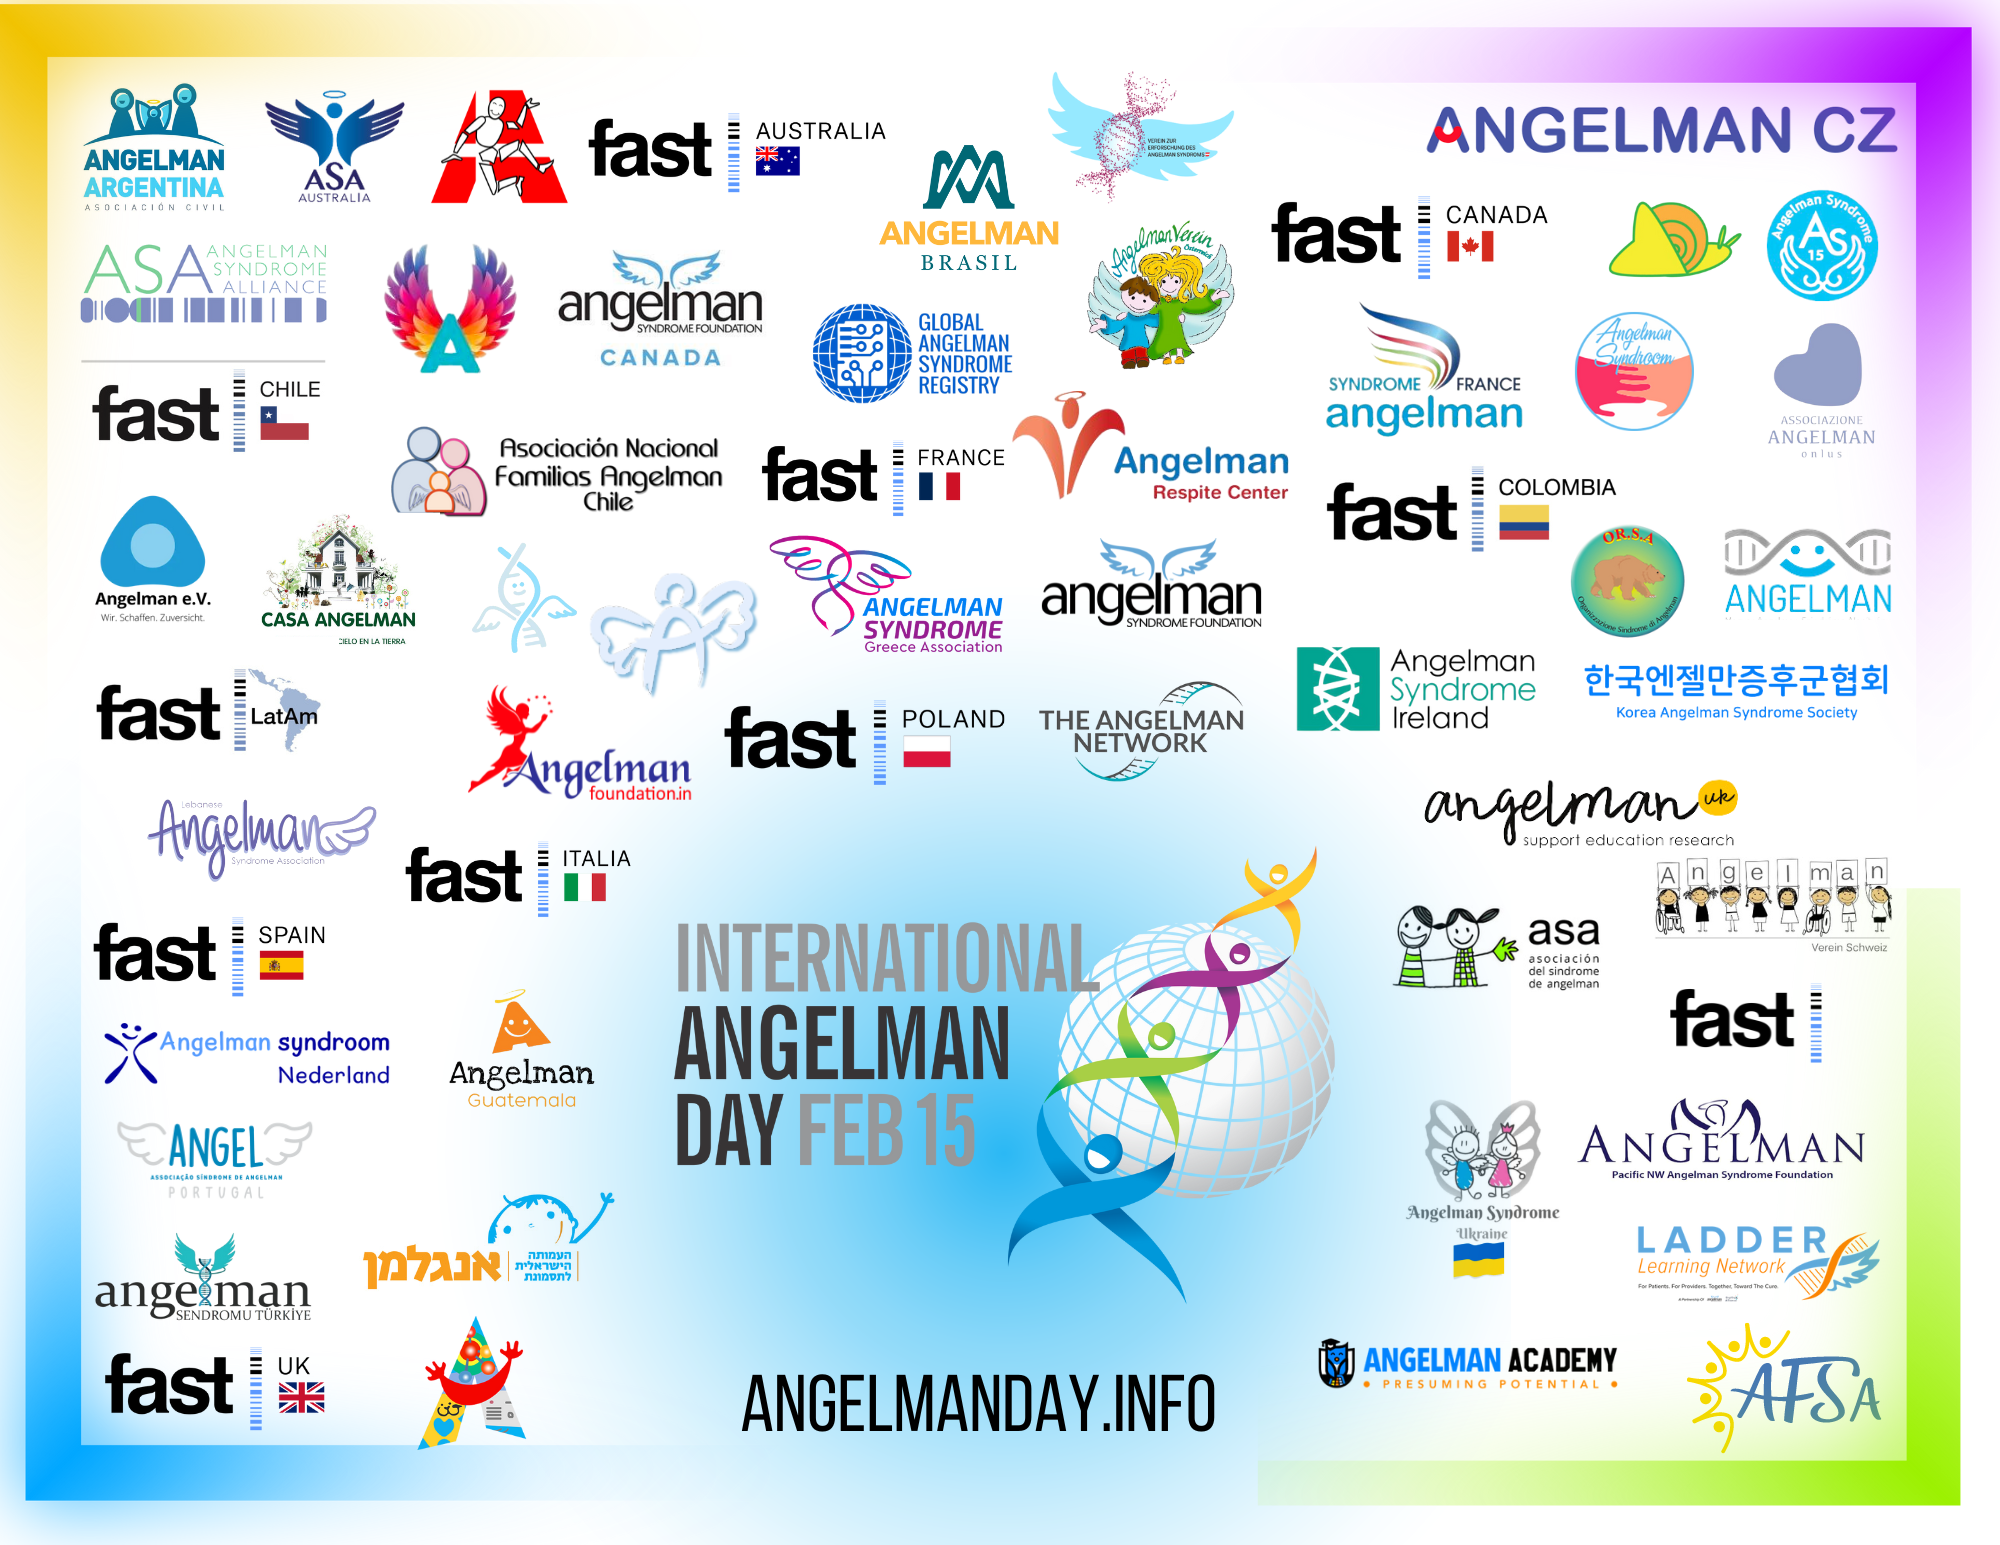 What is International Angelman Day? International Angelman Day